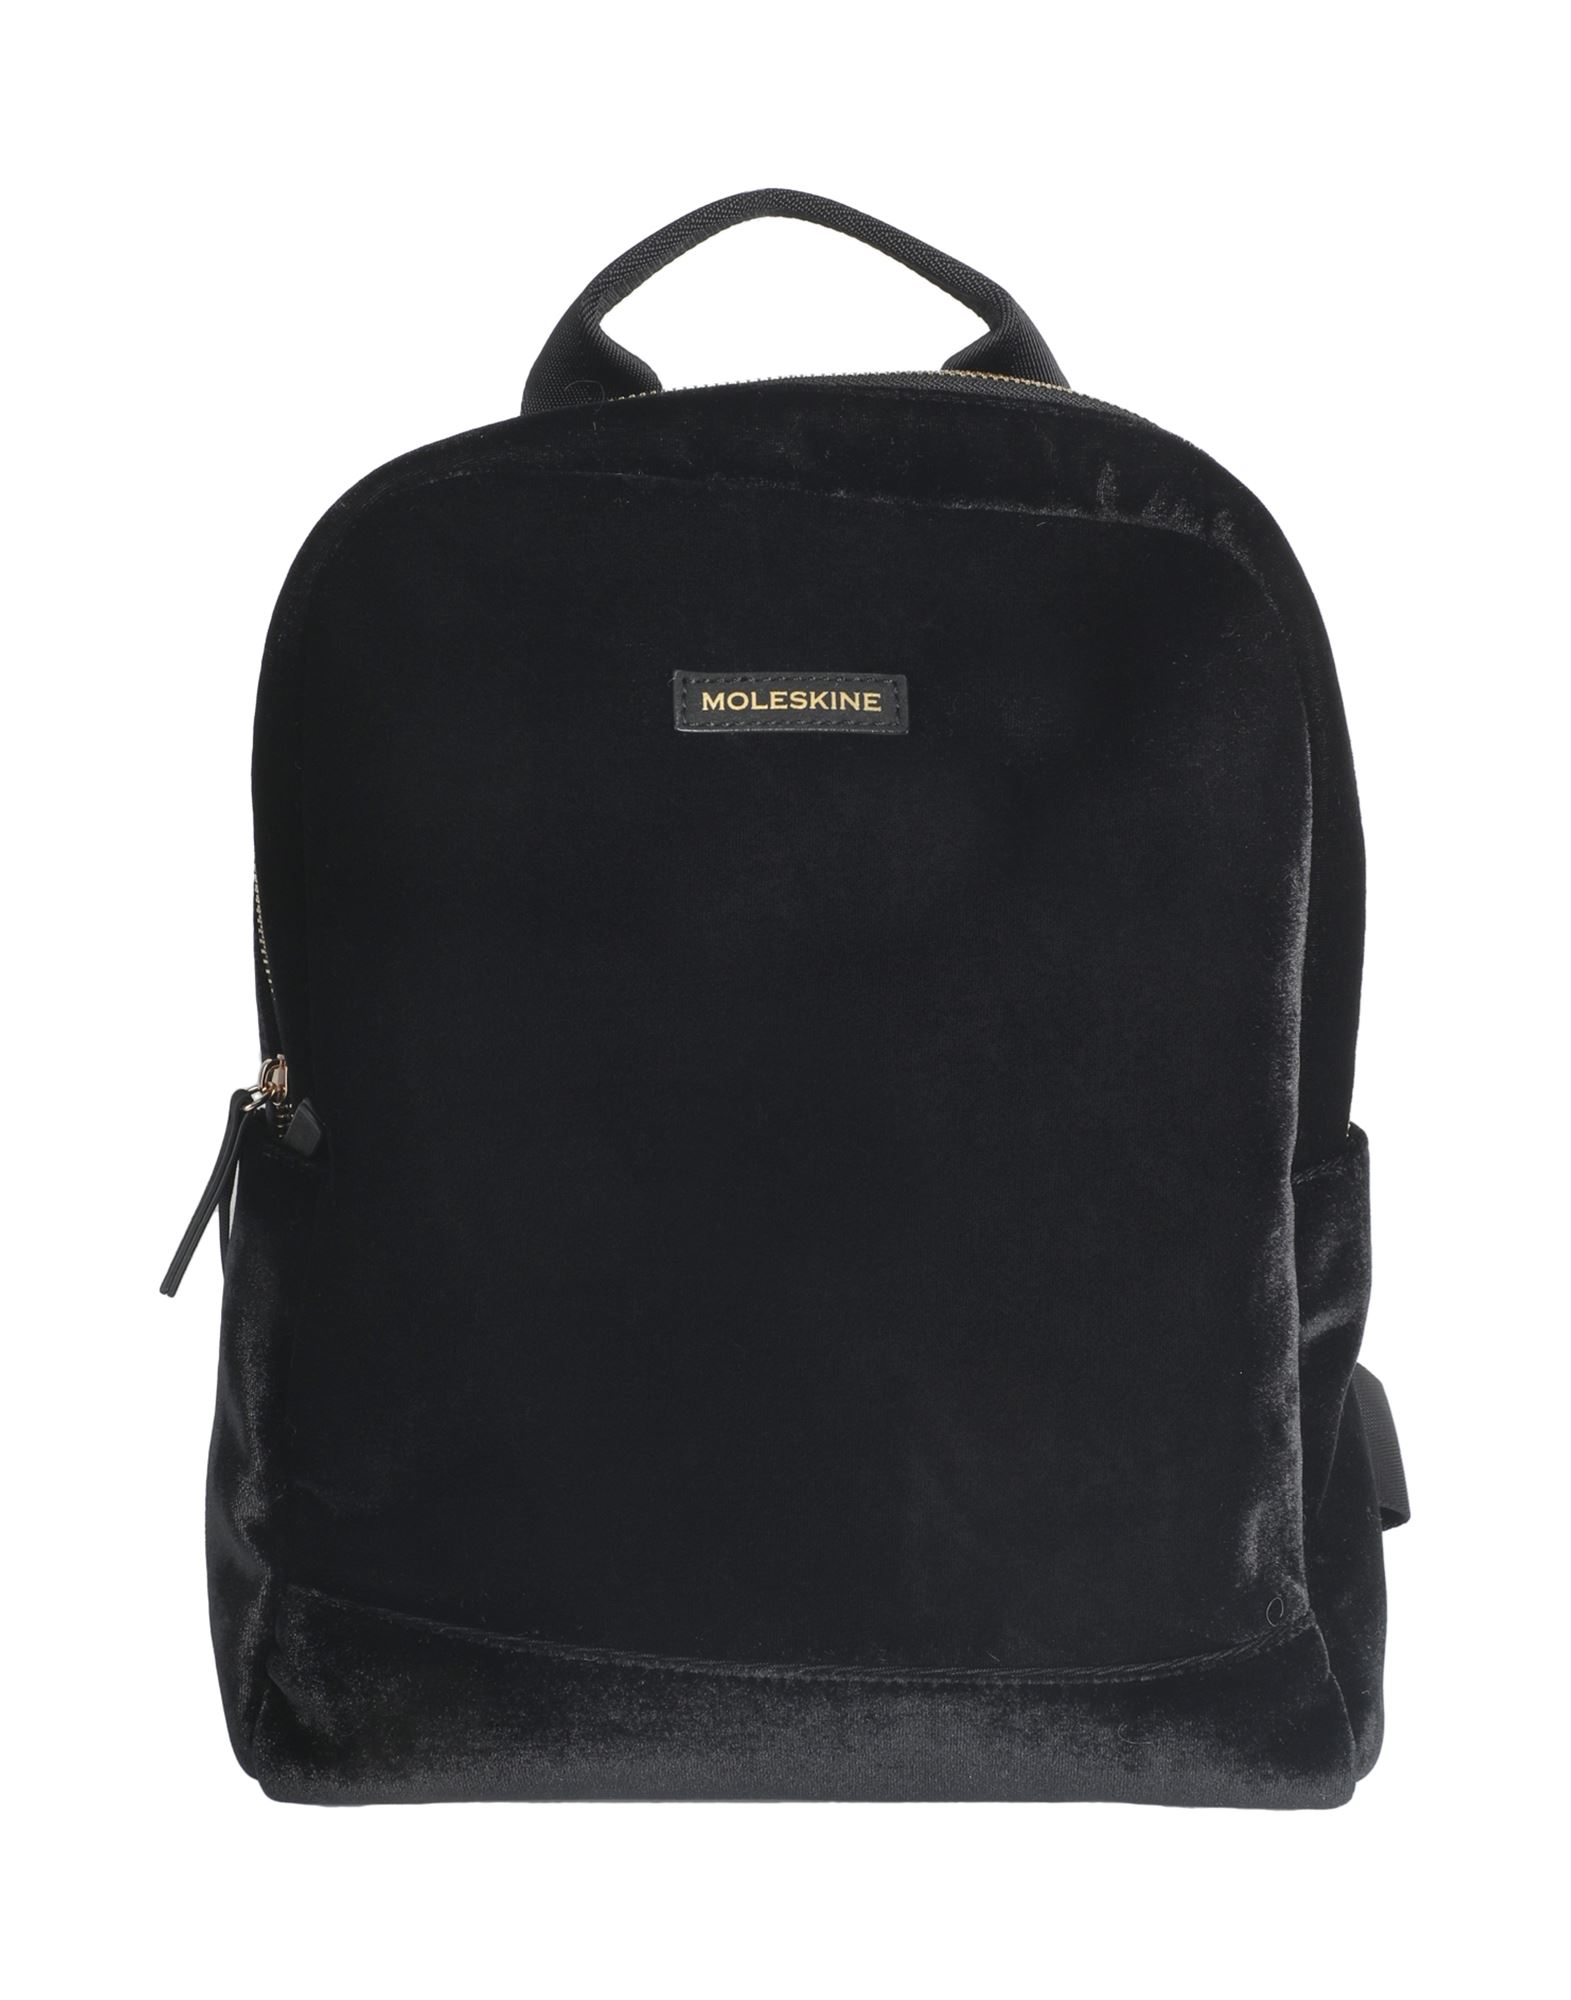 Moleskine Backpacks In Black